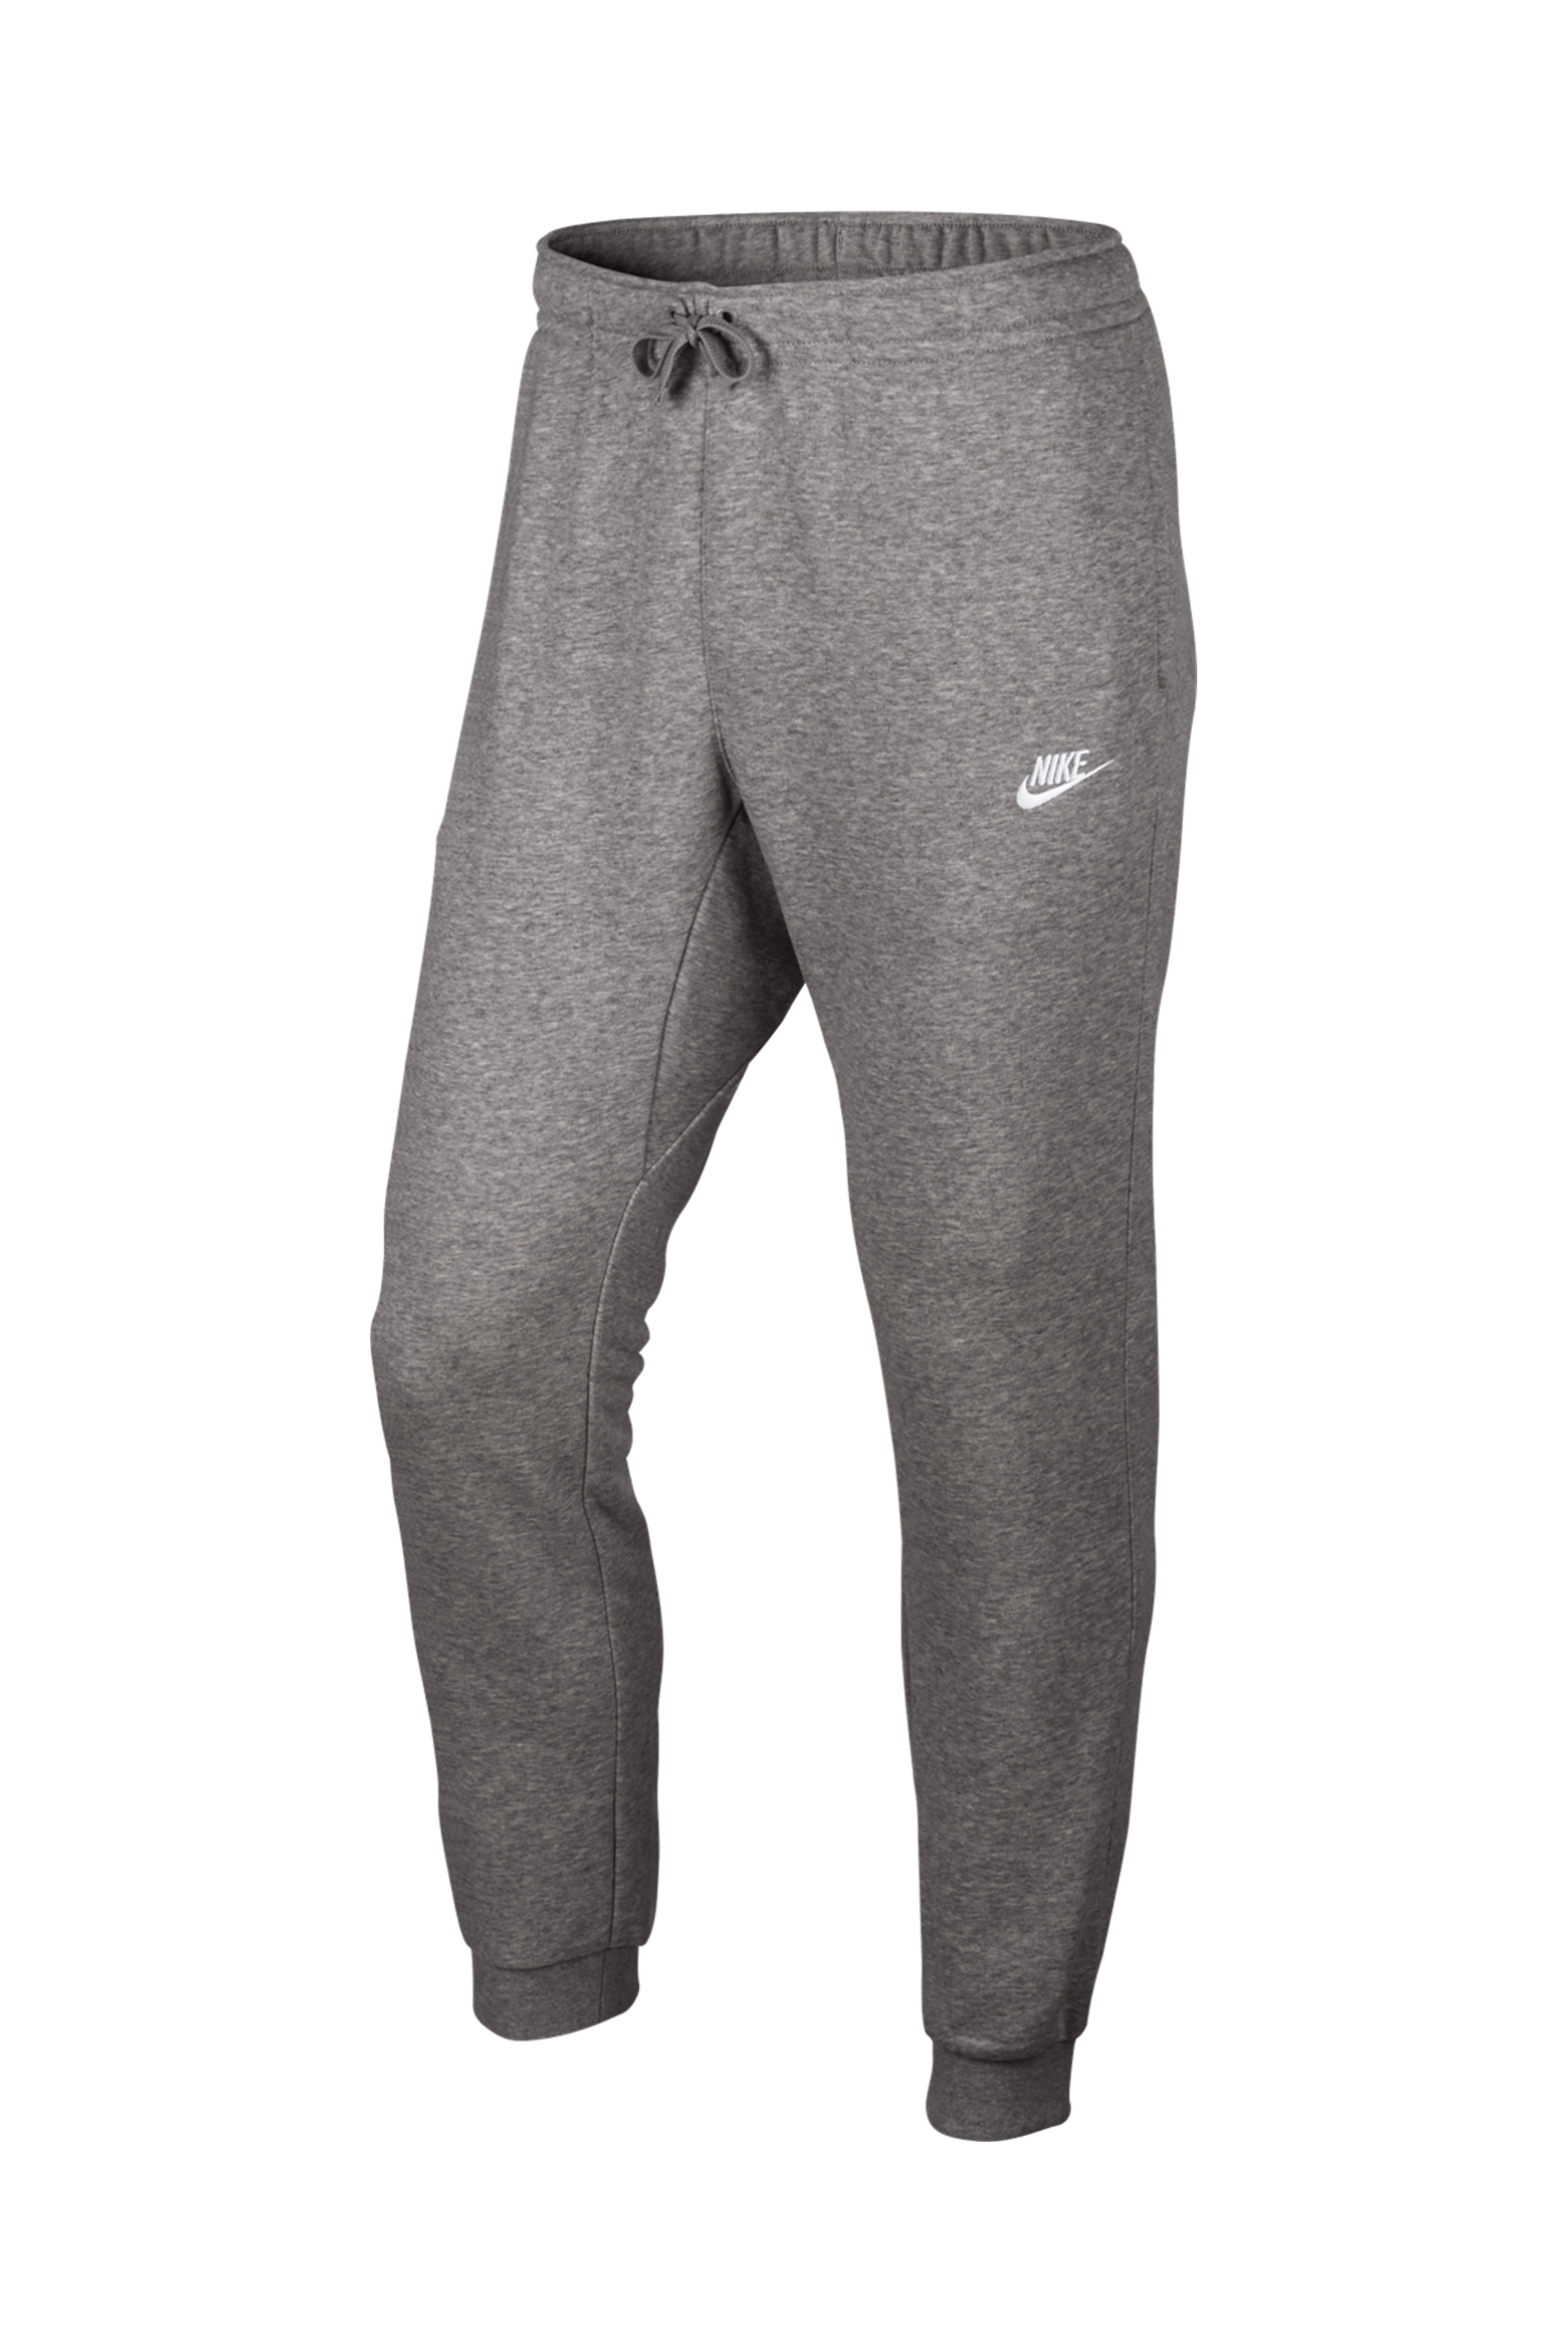 Pants Nike NSW Jogger Club | R-GOL.com 